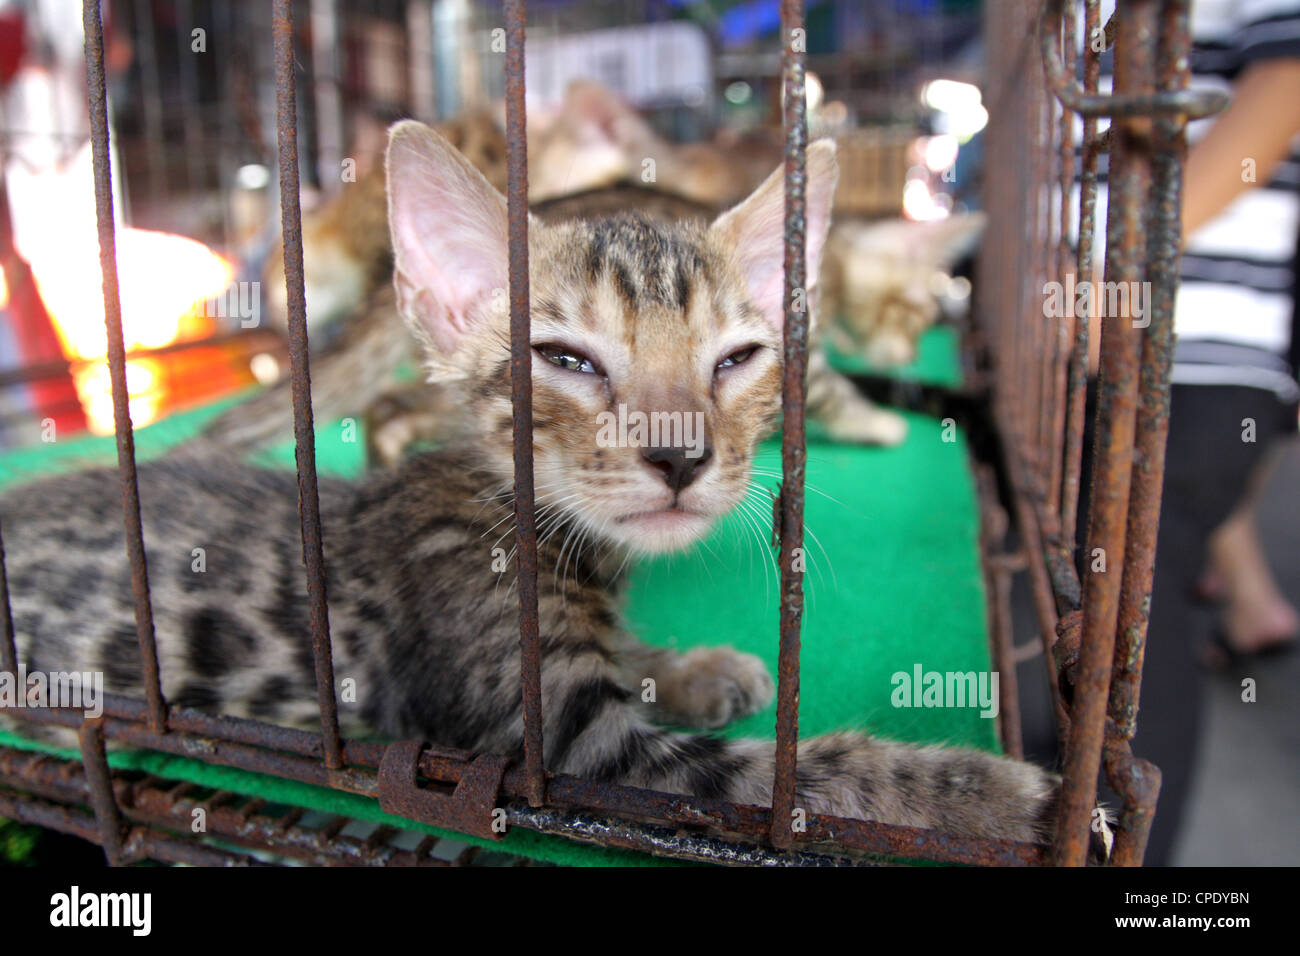 Bengal Cats For Sale In Pet Shop Chatuchak Market Bangkok Stock Photo Alamy